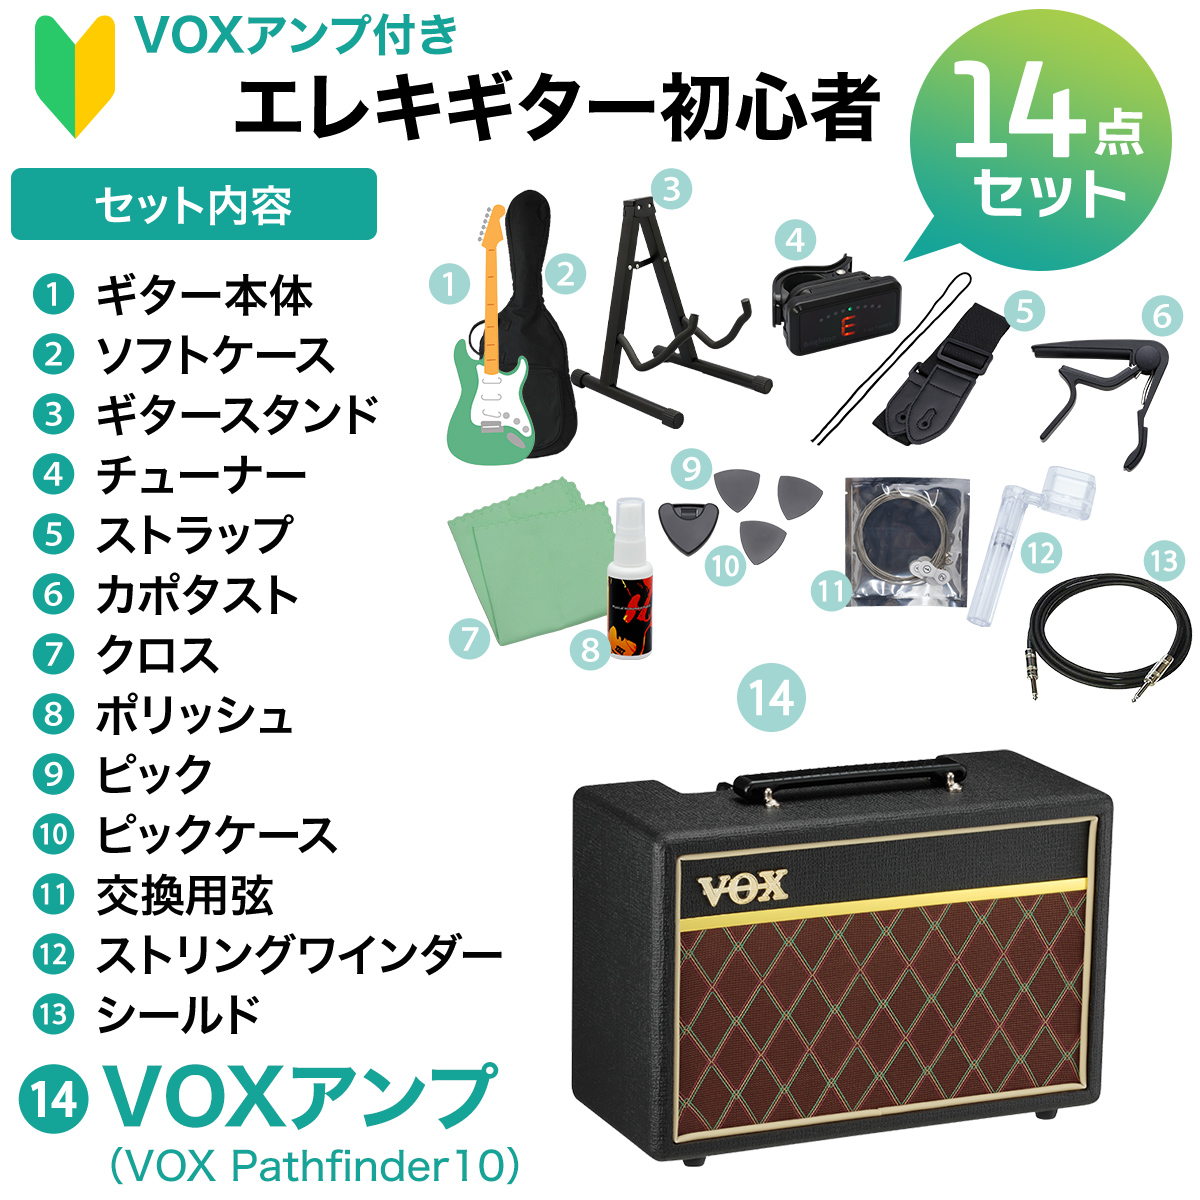 MOOER GTRS S800 エレキギター初心者14点セット 【VOXアンプ付き